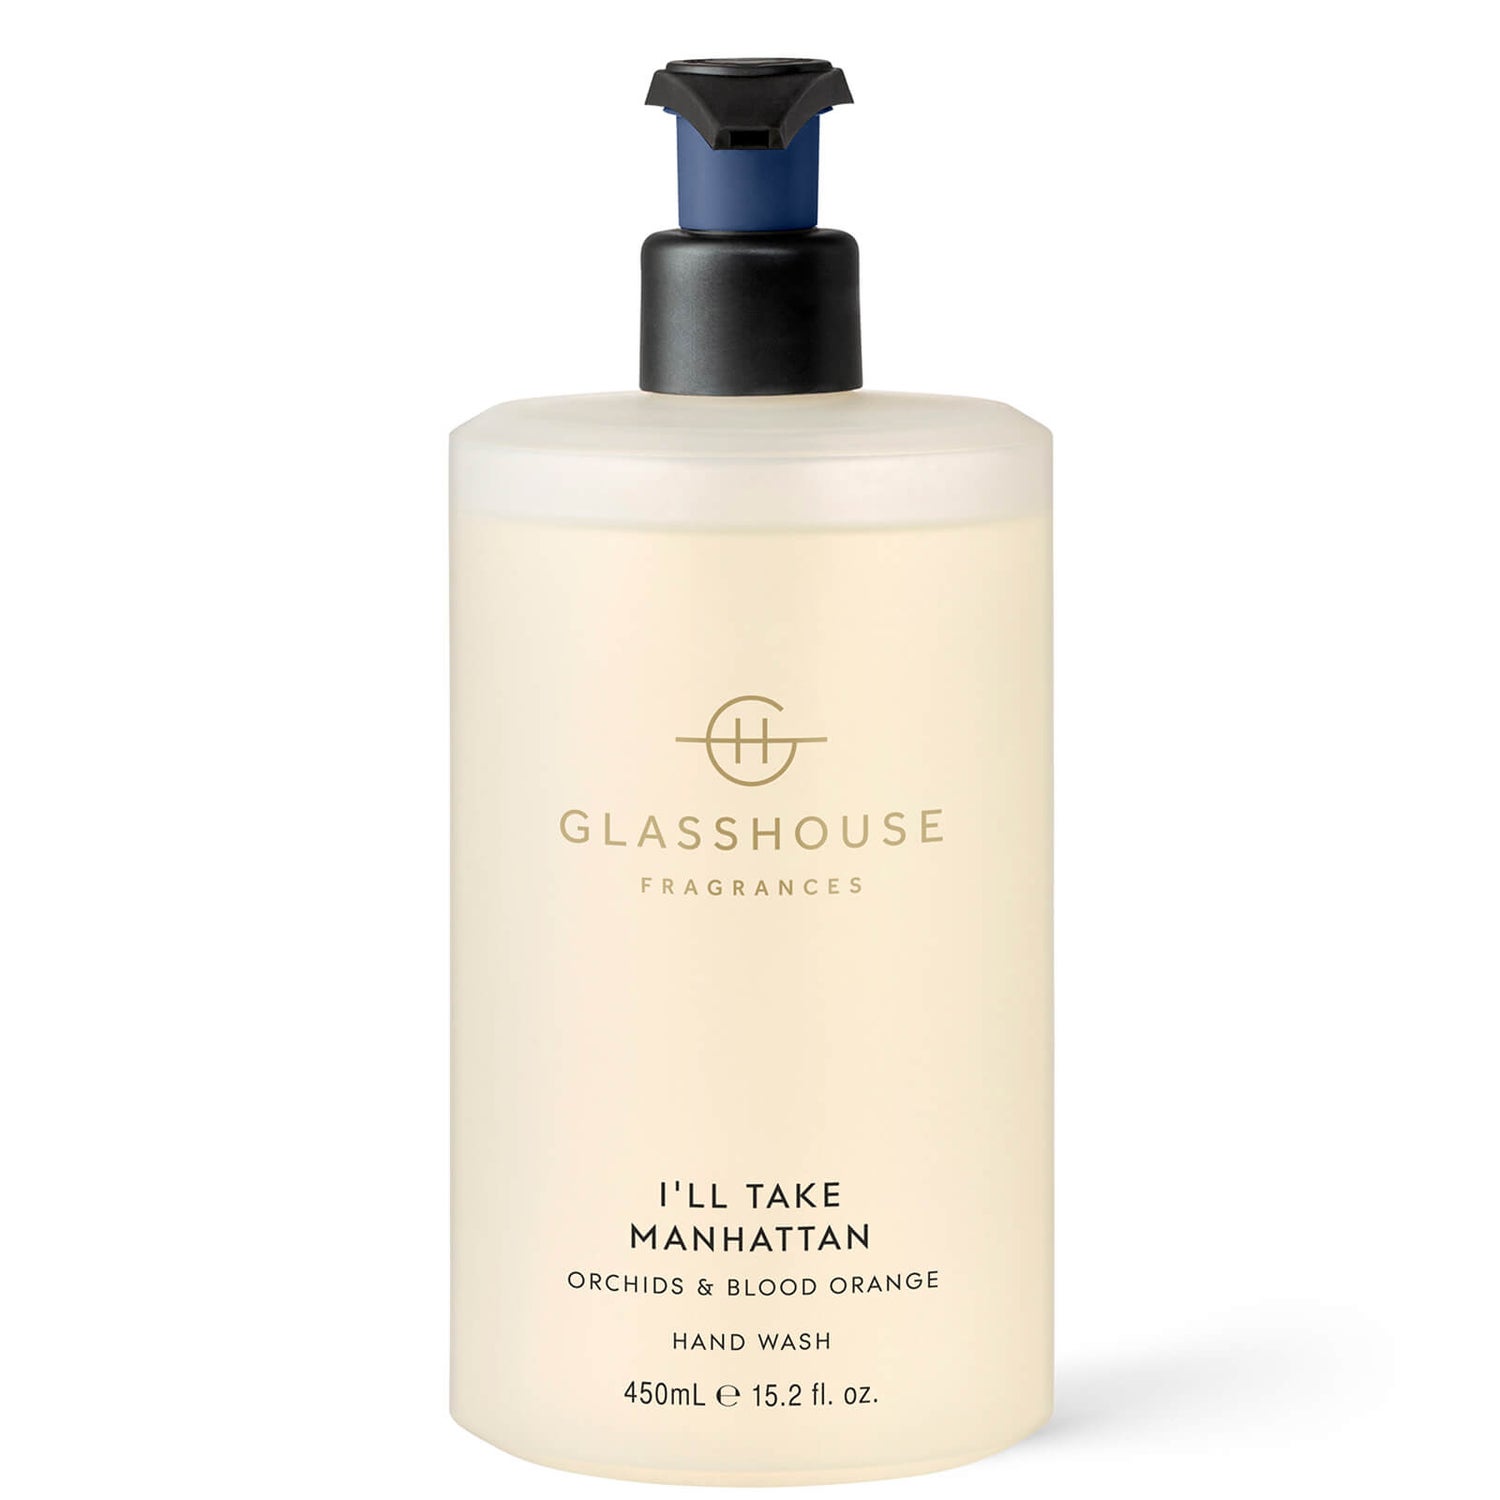 Glasshouse Fragrances I'Ll Take Manhattan Hand Wash 450ml